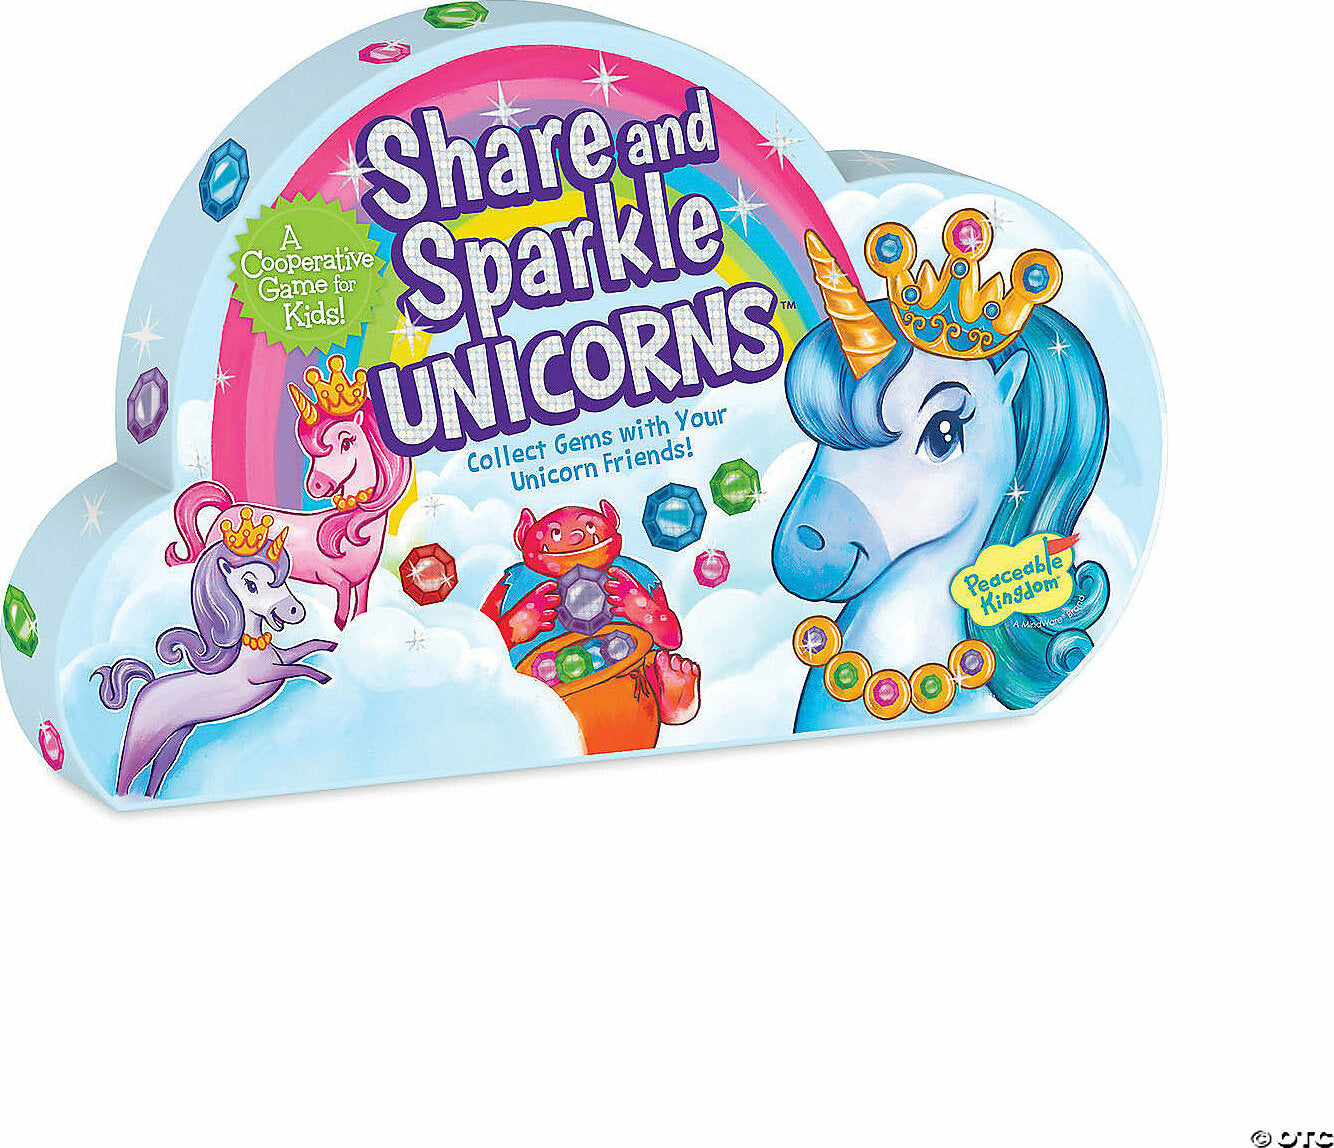 Share and Sparkle Unicorns Game